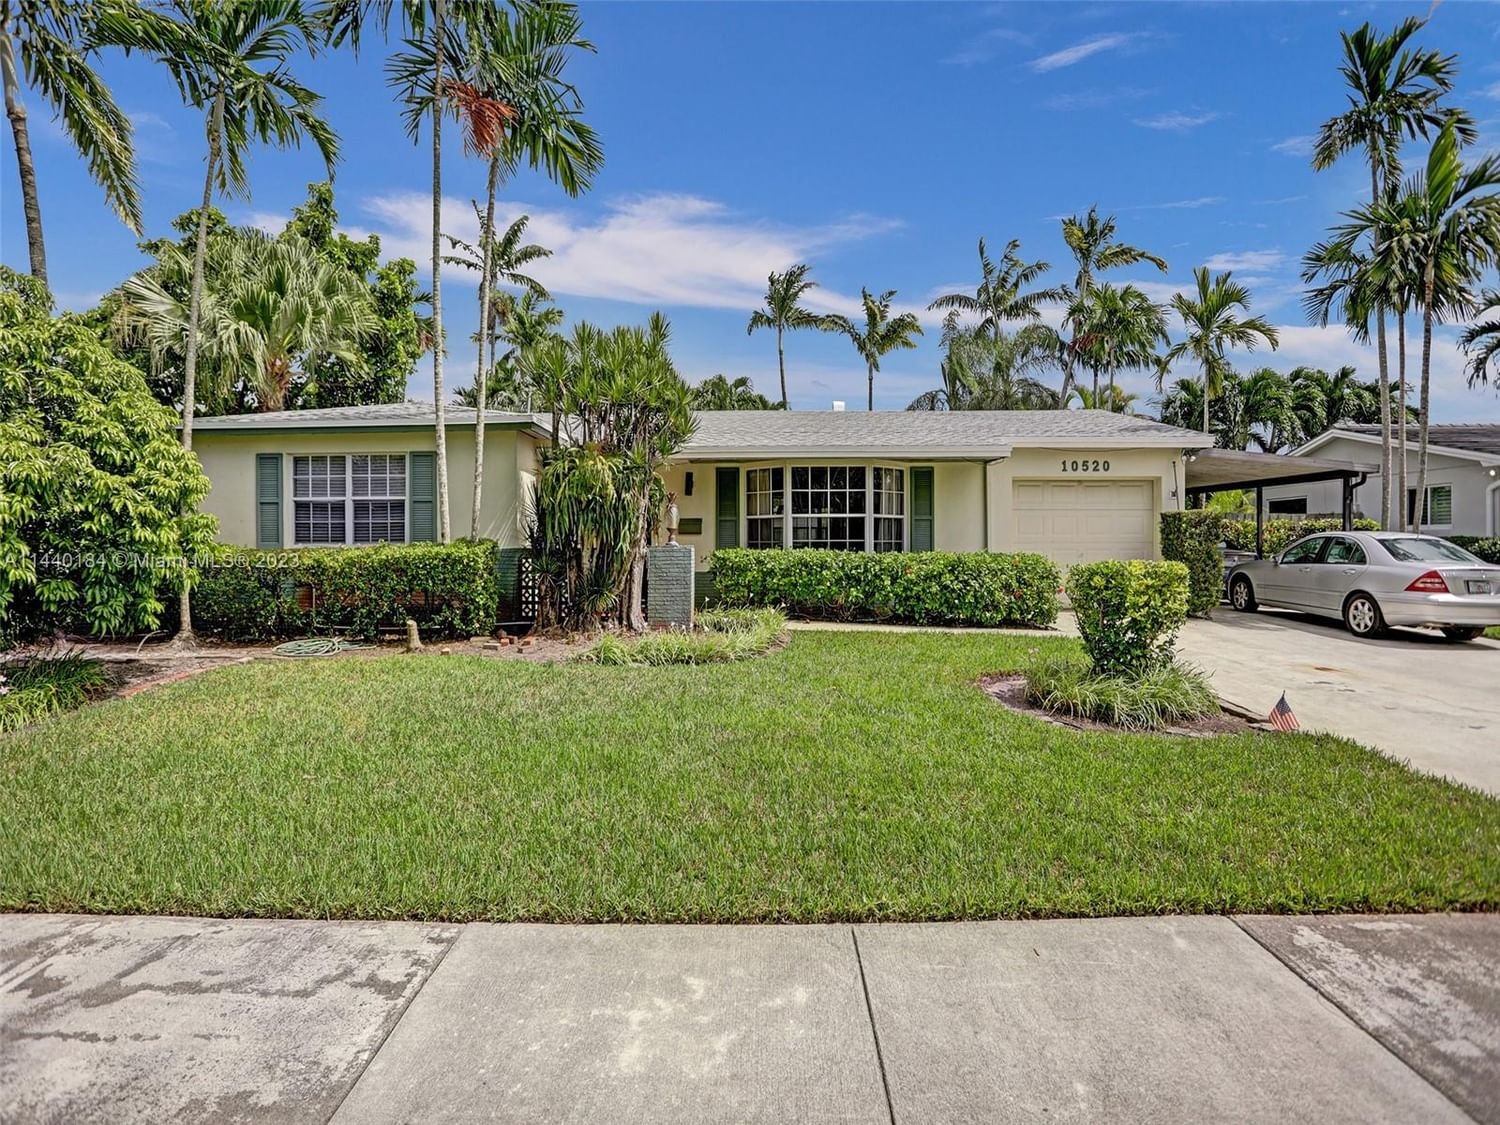 Real estate property located at 10520 96th St, Miami-Dade County, Miami, FL